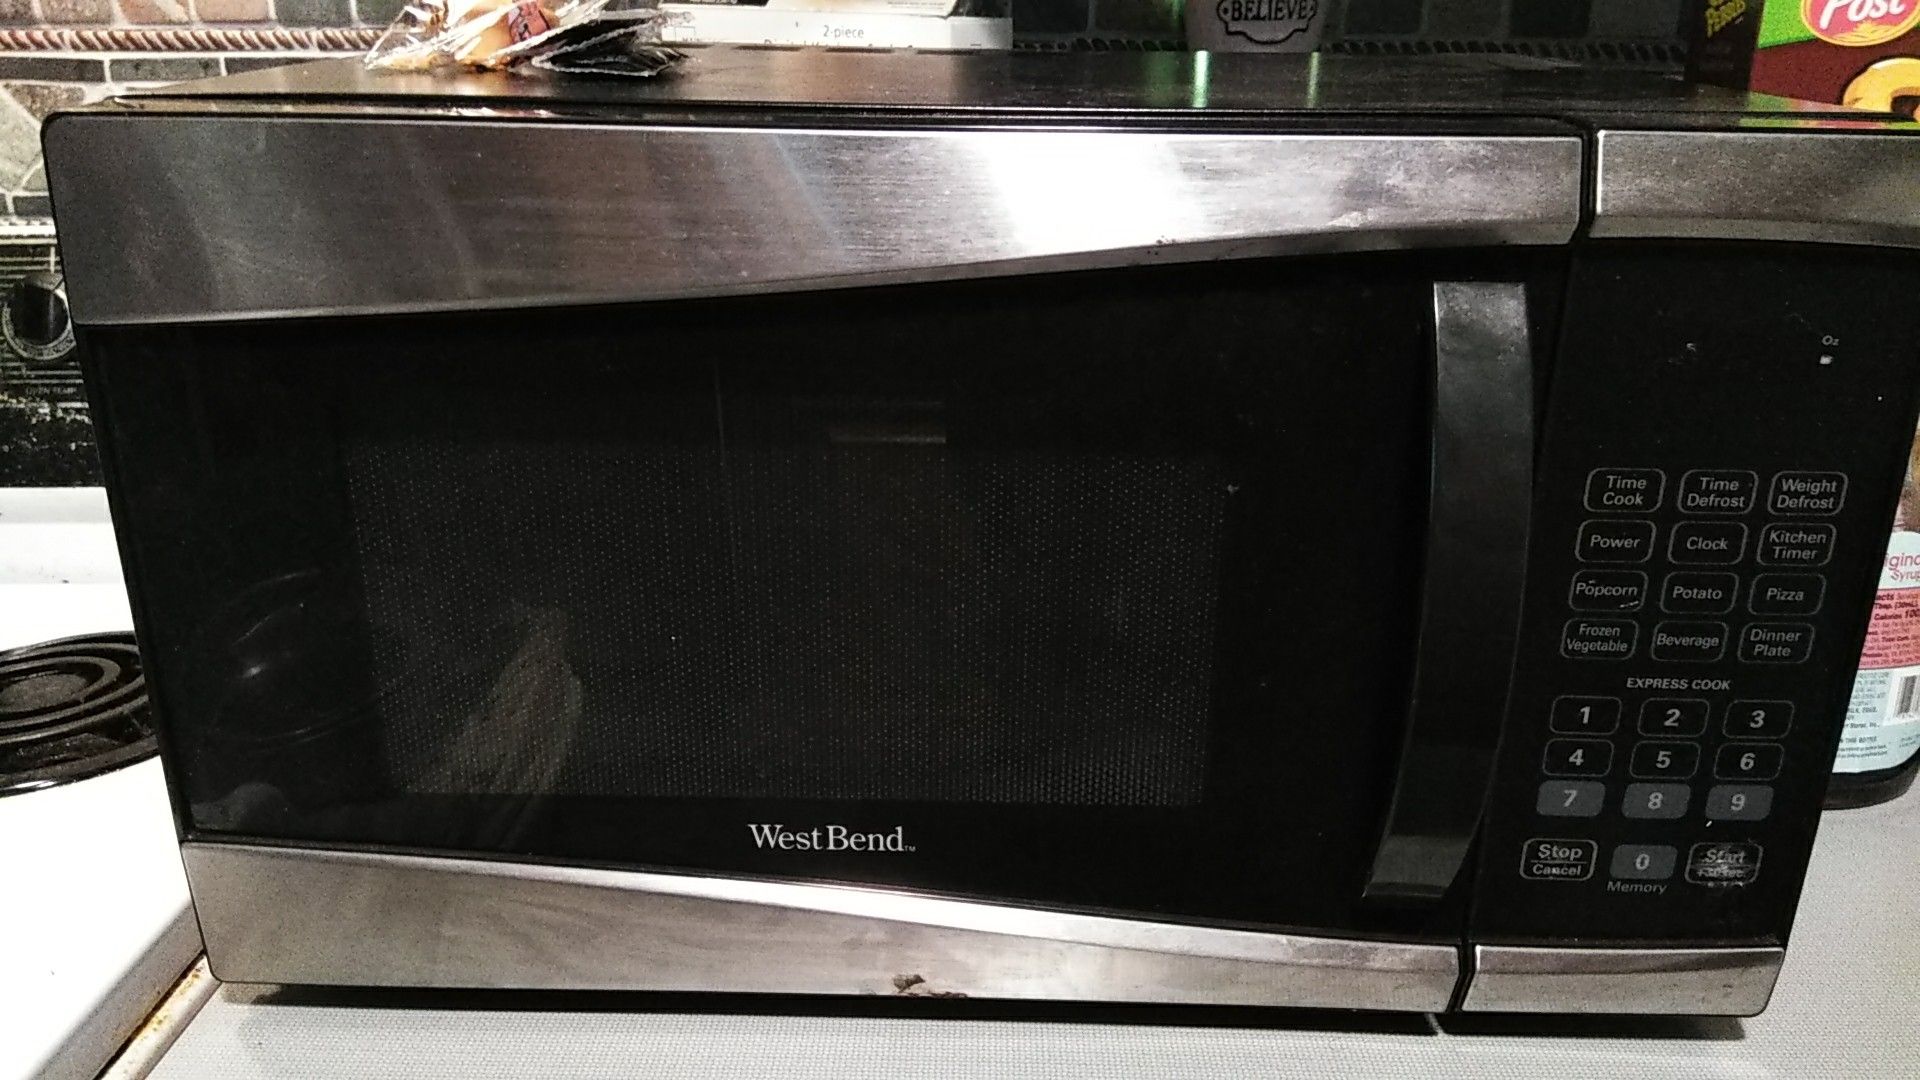 West Bend microwave